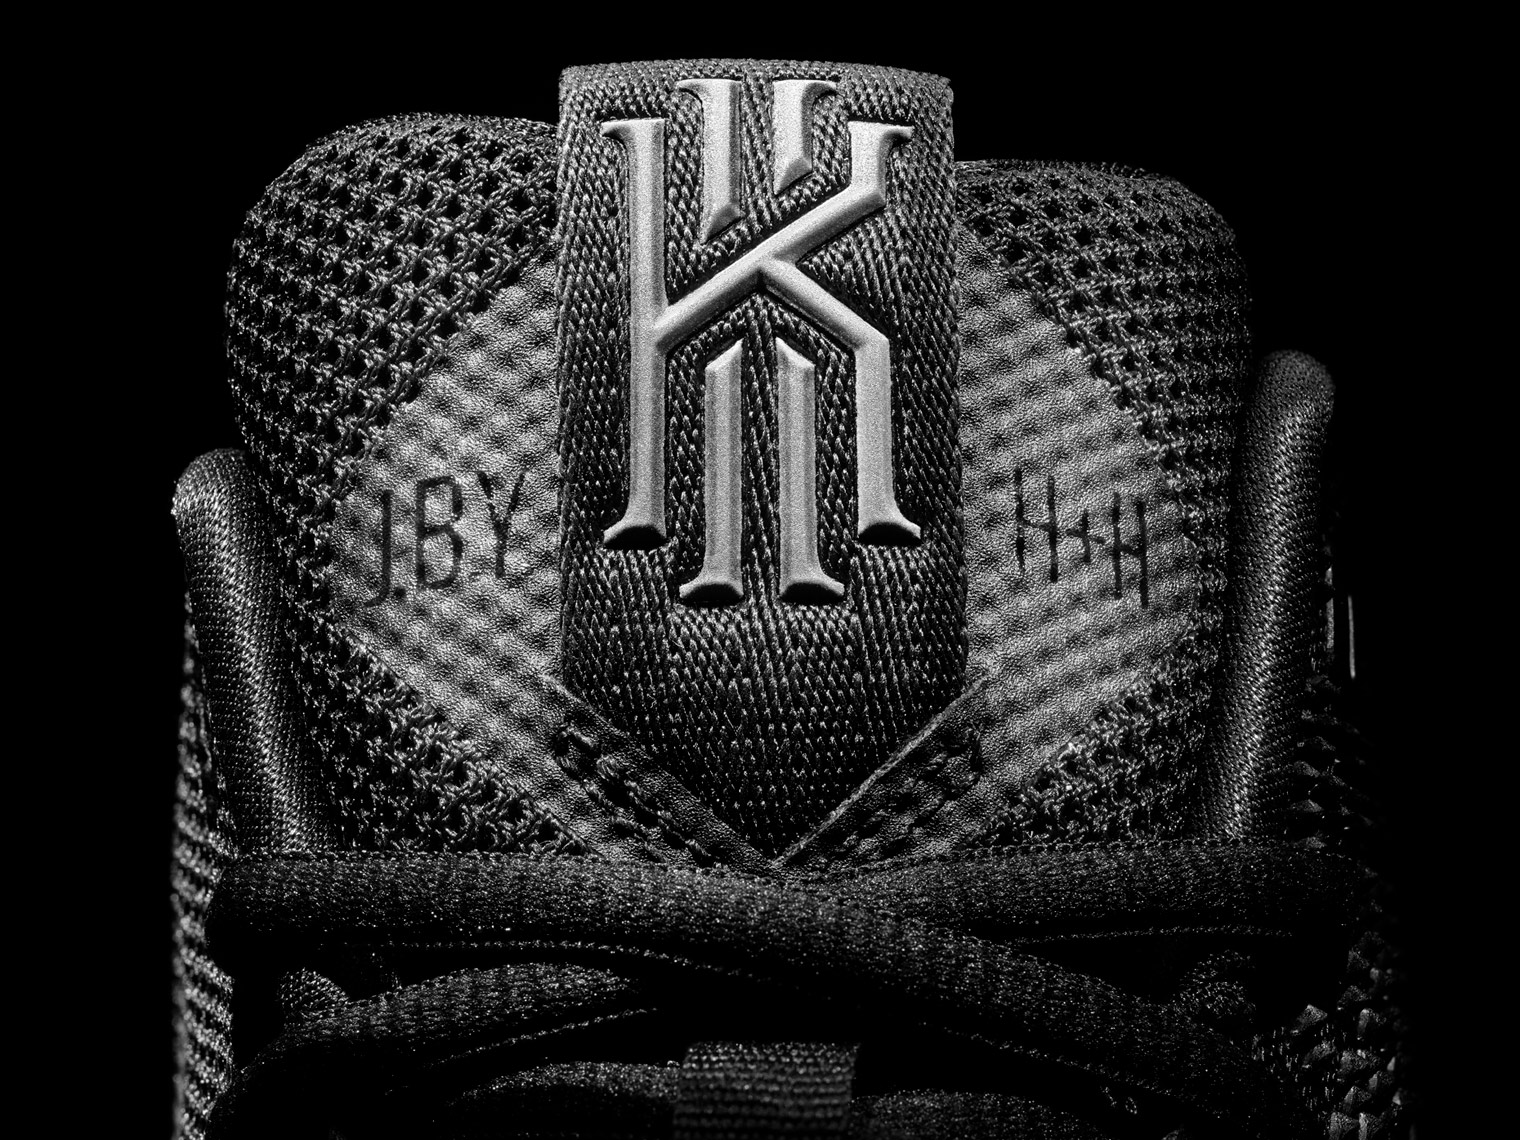 Kyrie Irving Nike Shoe Image Retouching